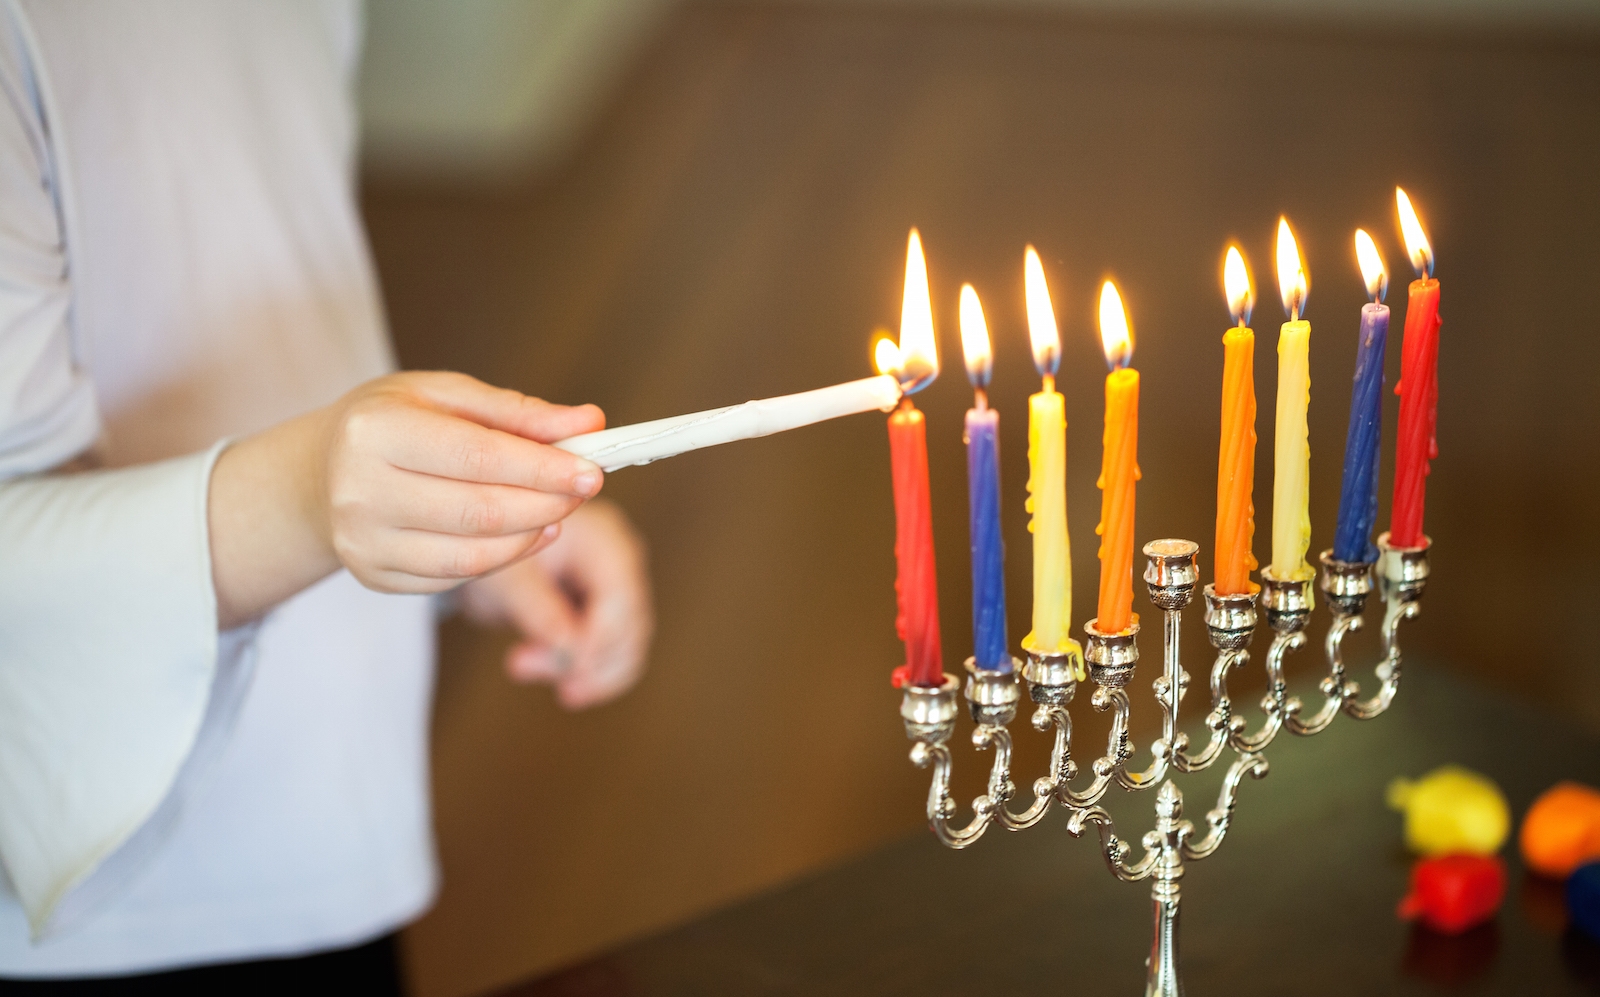 hanukkah candles